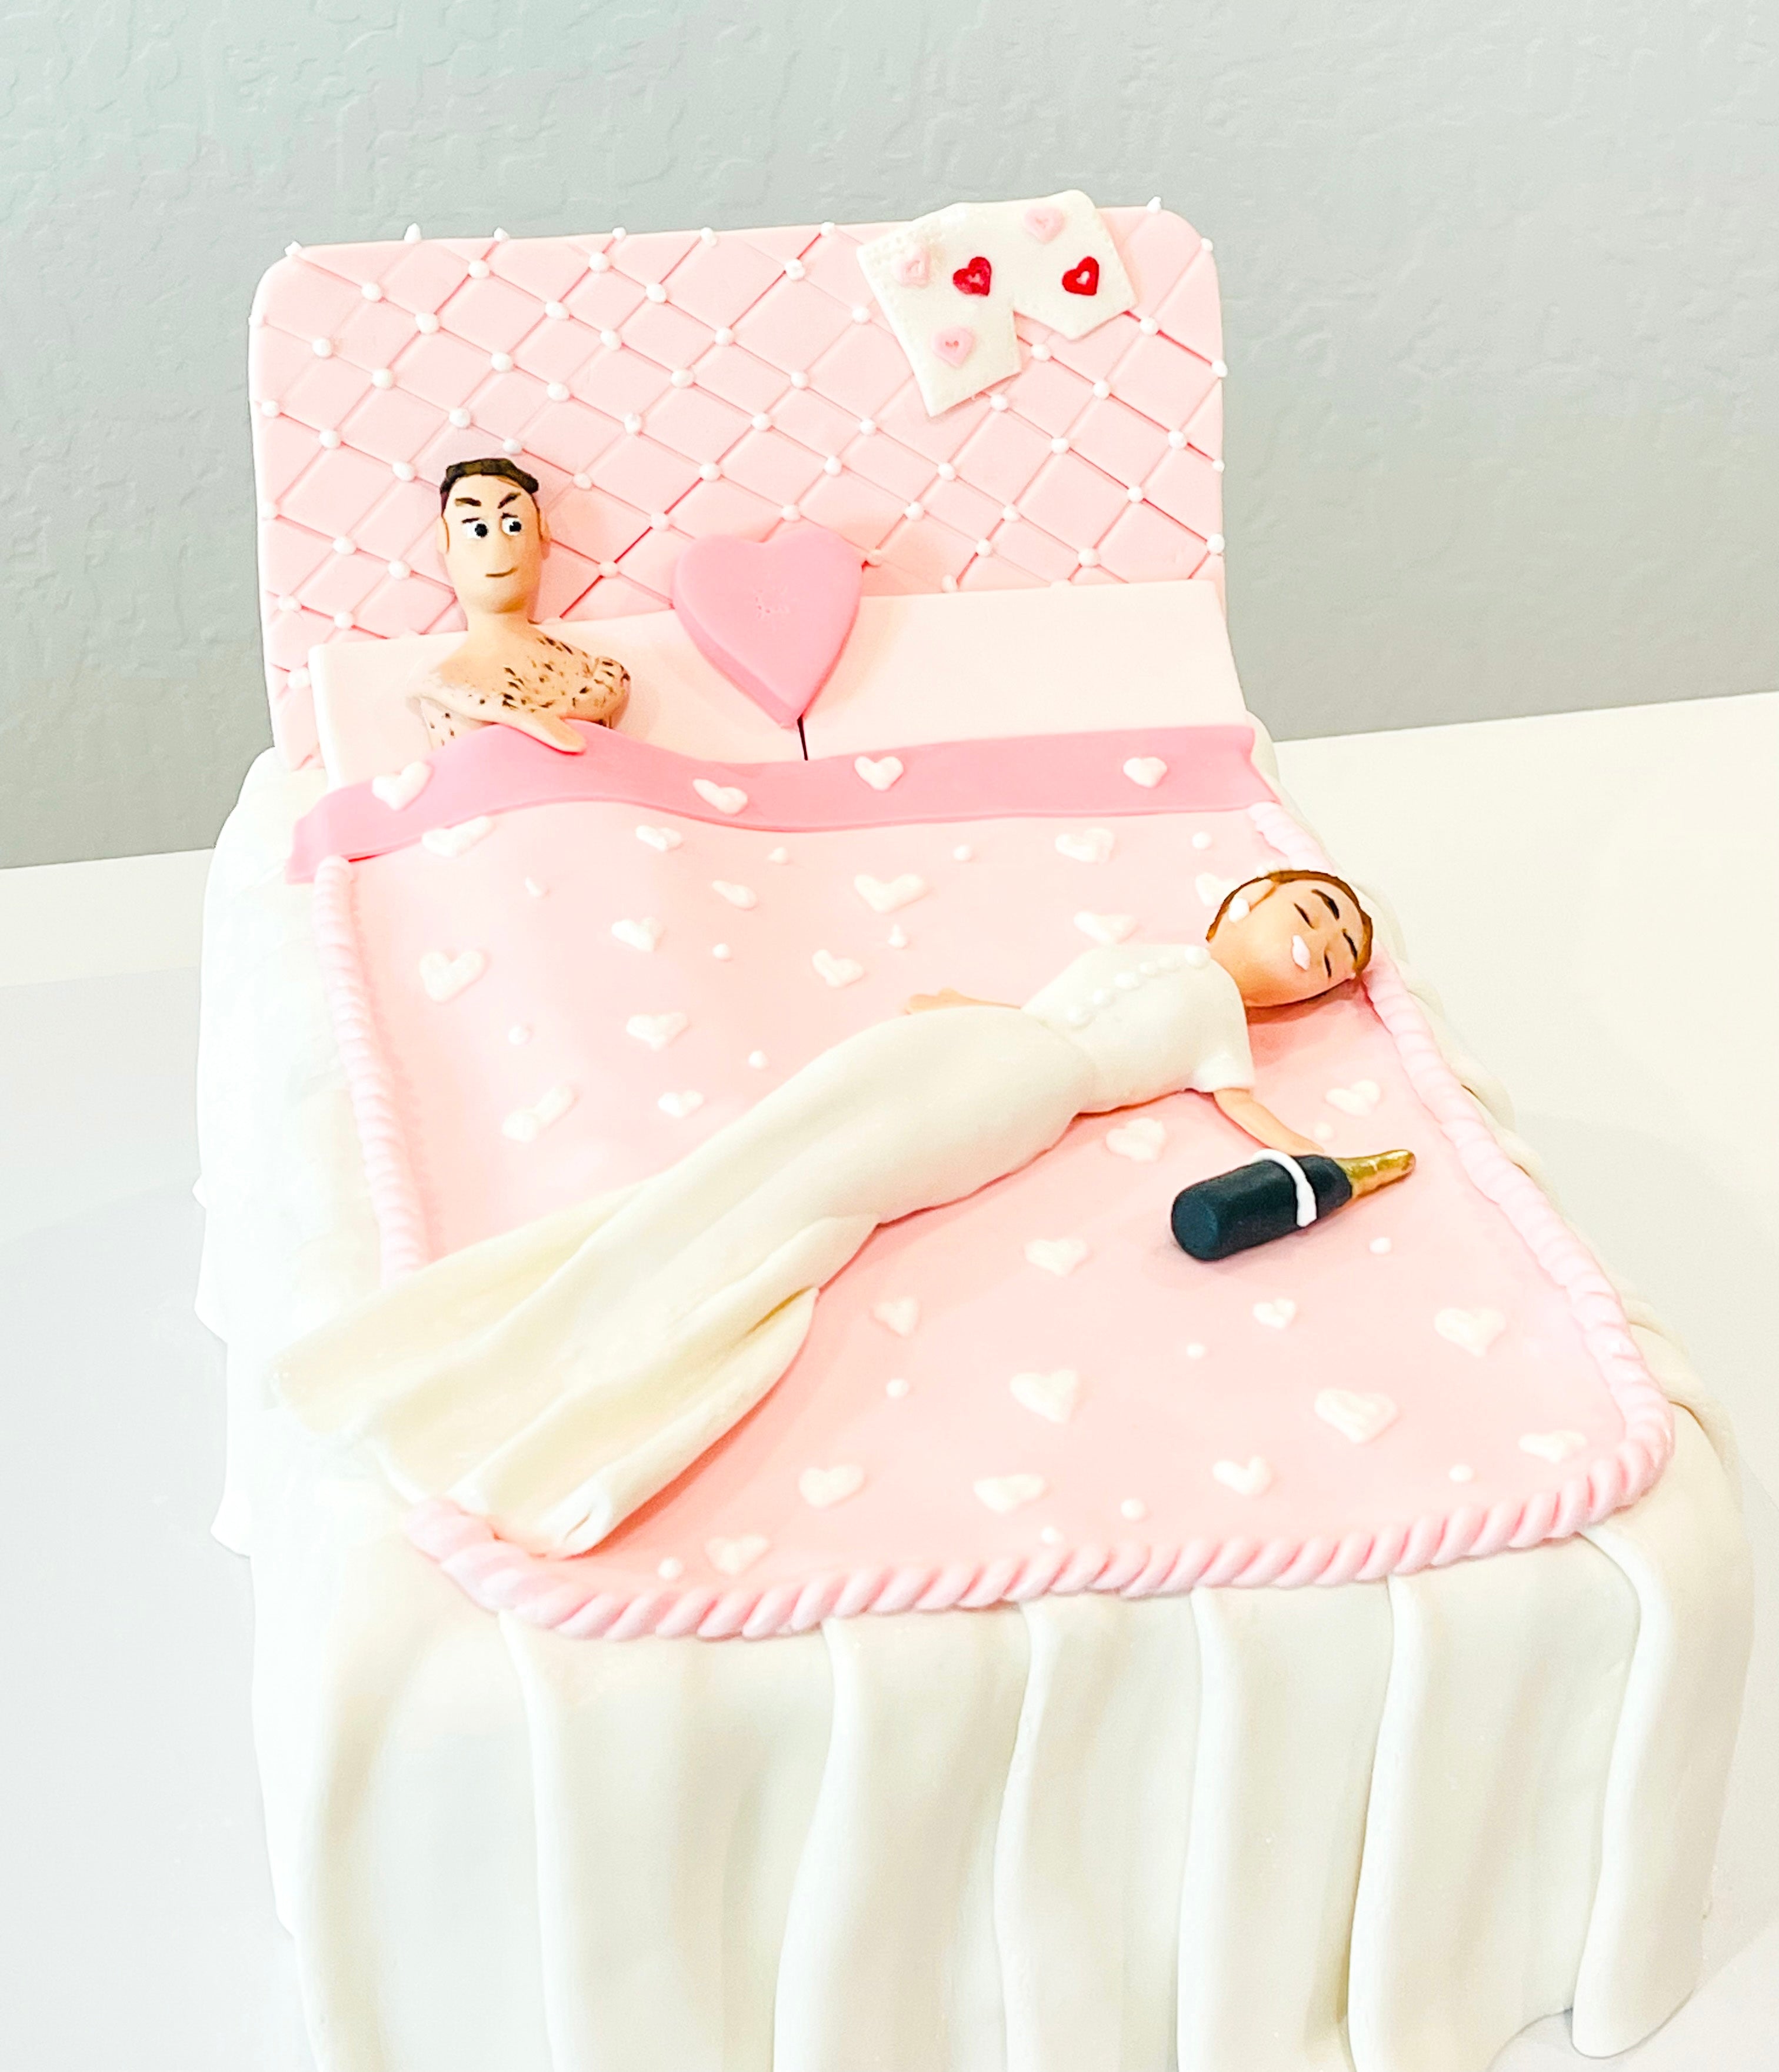 Bachelorette Theme Cake Designs & Images